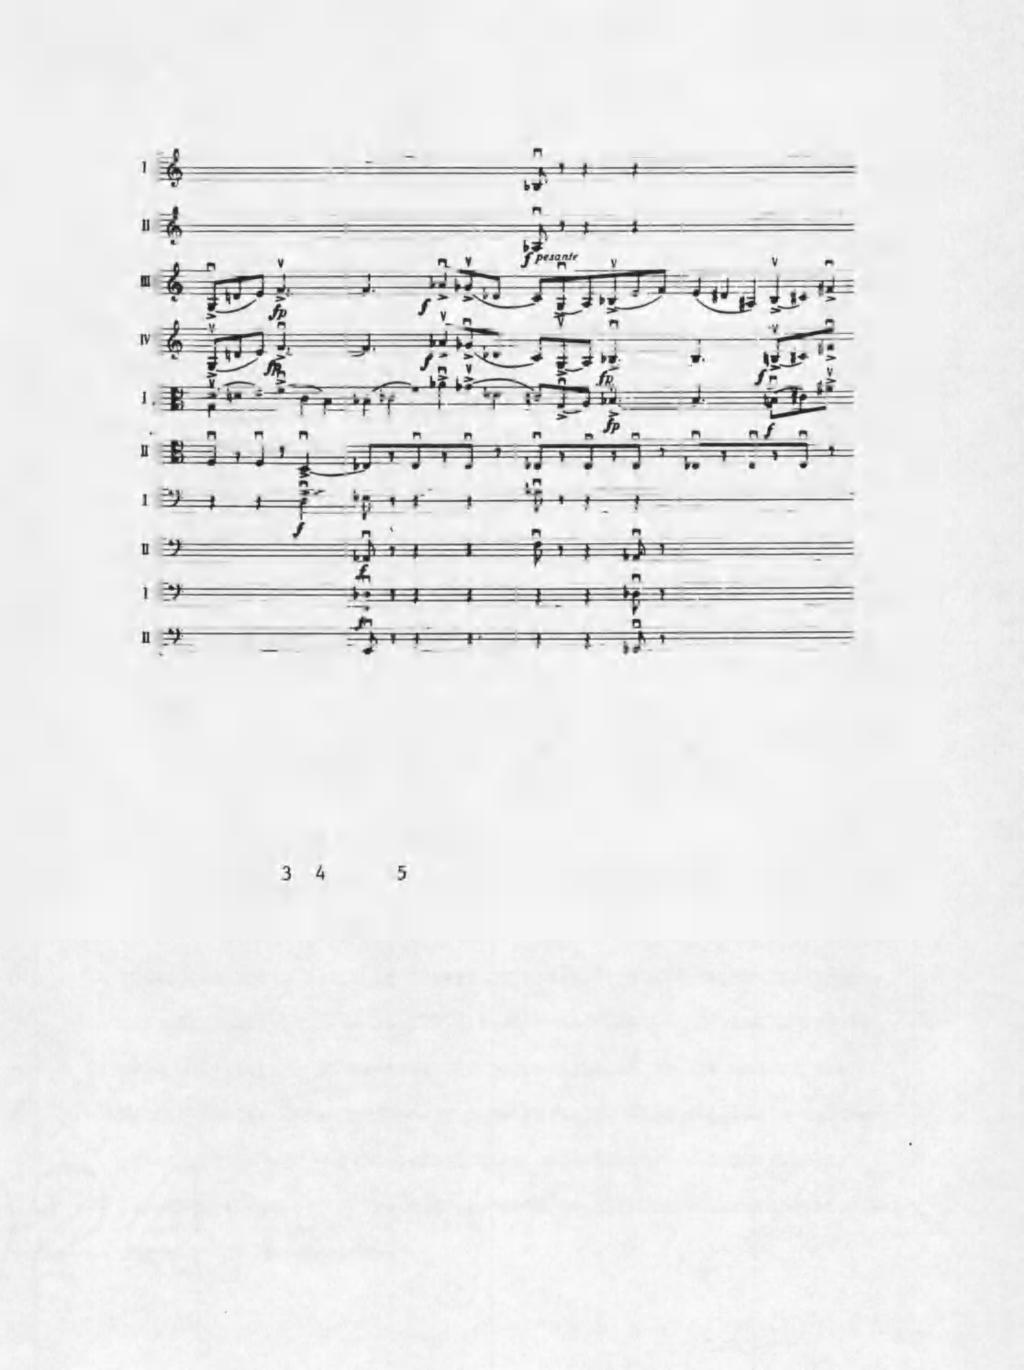 47 y ptsantr Vni Vie Vc. Cb. / Figure 29. Lutoslawski, Funeral Music, Metamorphoses, mm. 127-134, hemiola.